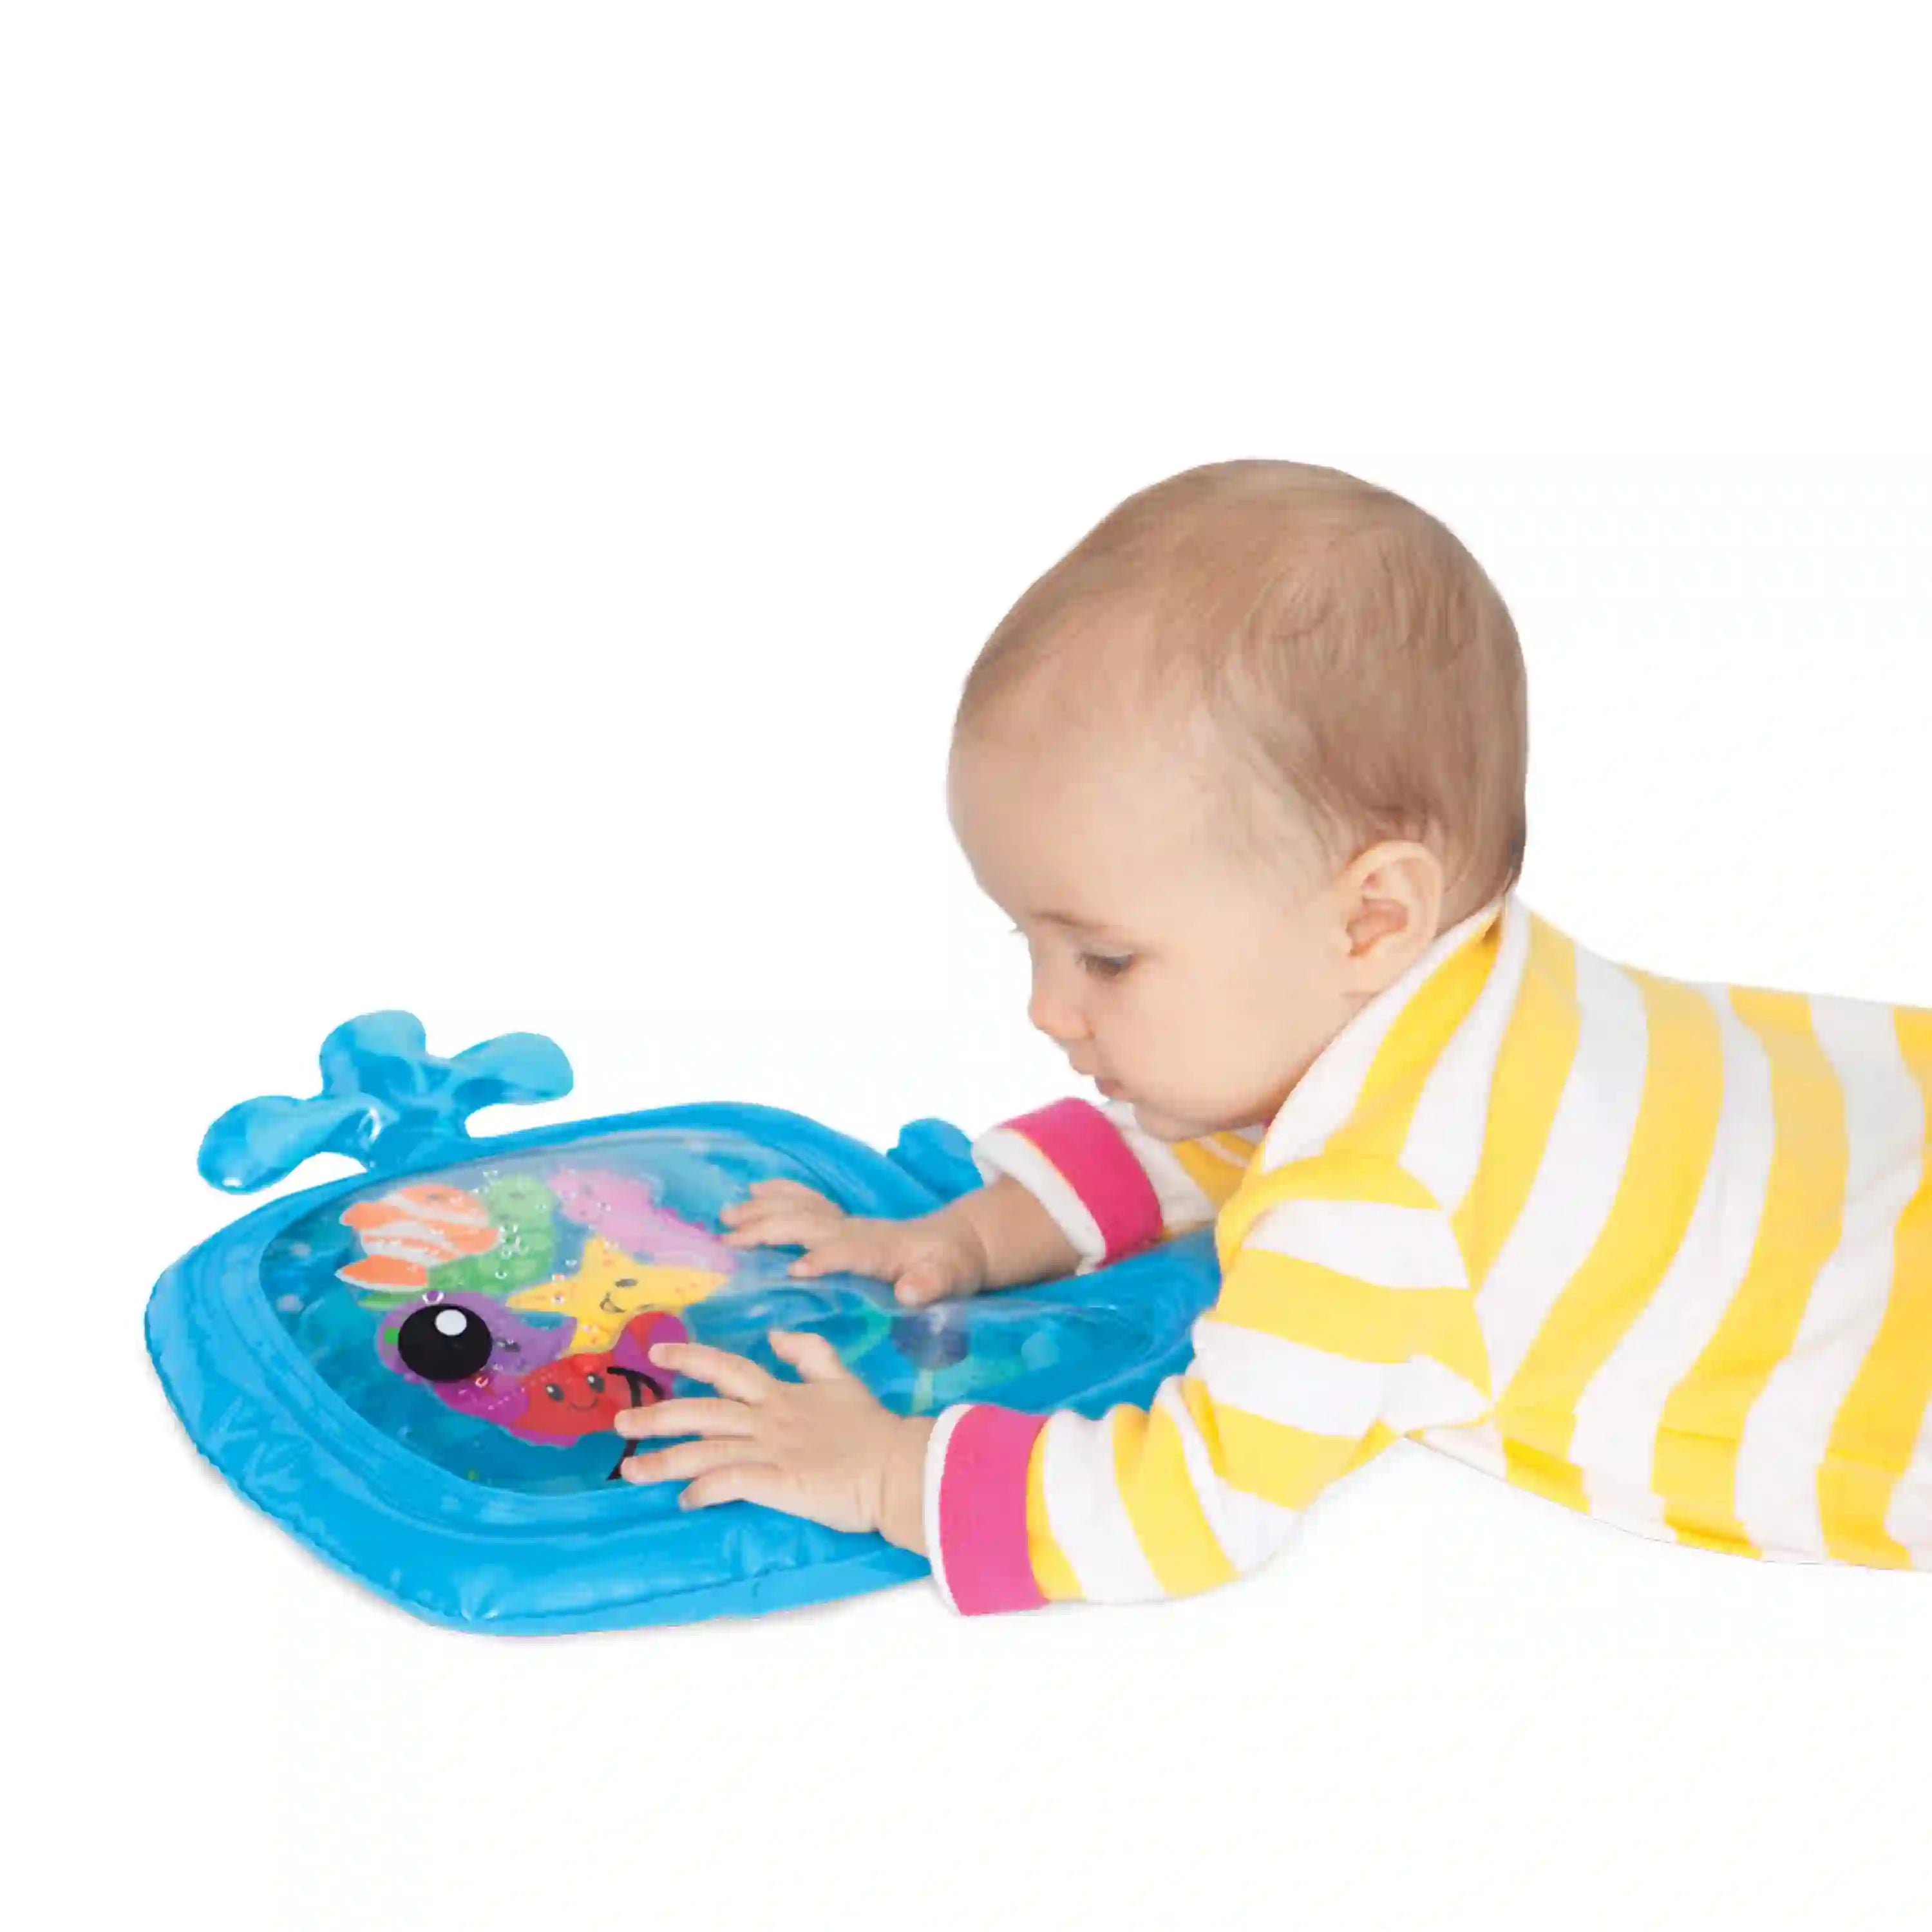 Infantino - Sensory - Pat & Play Water Mat - Whale